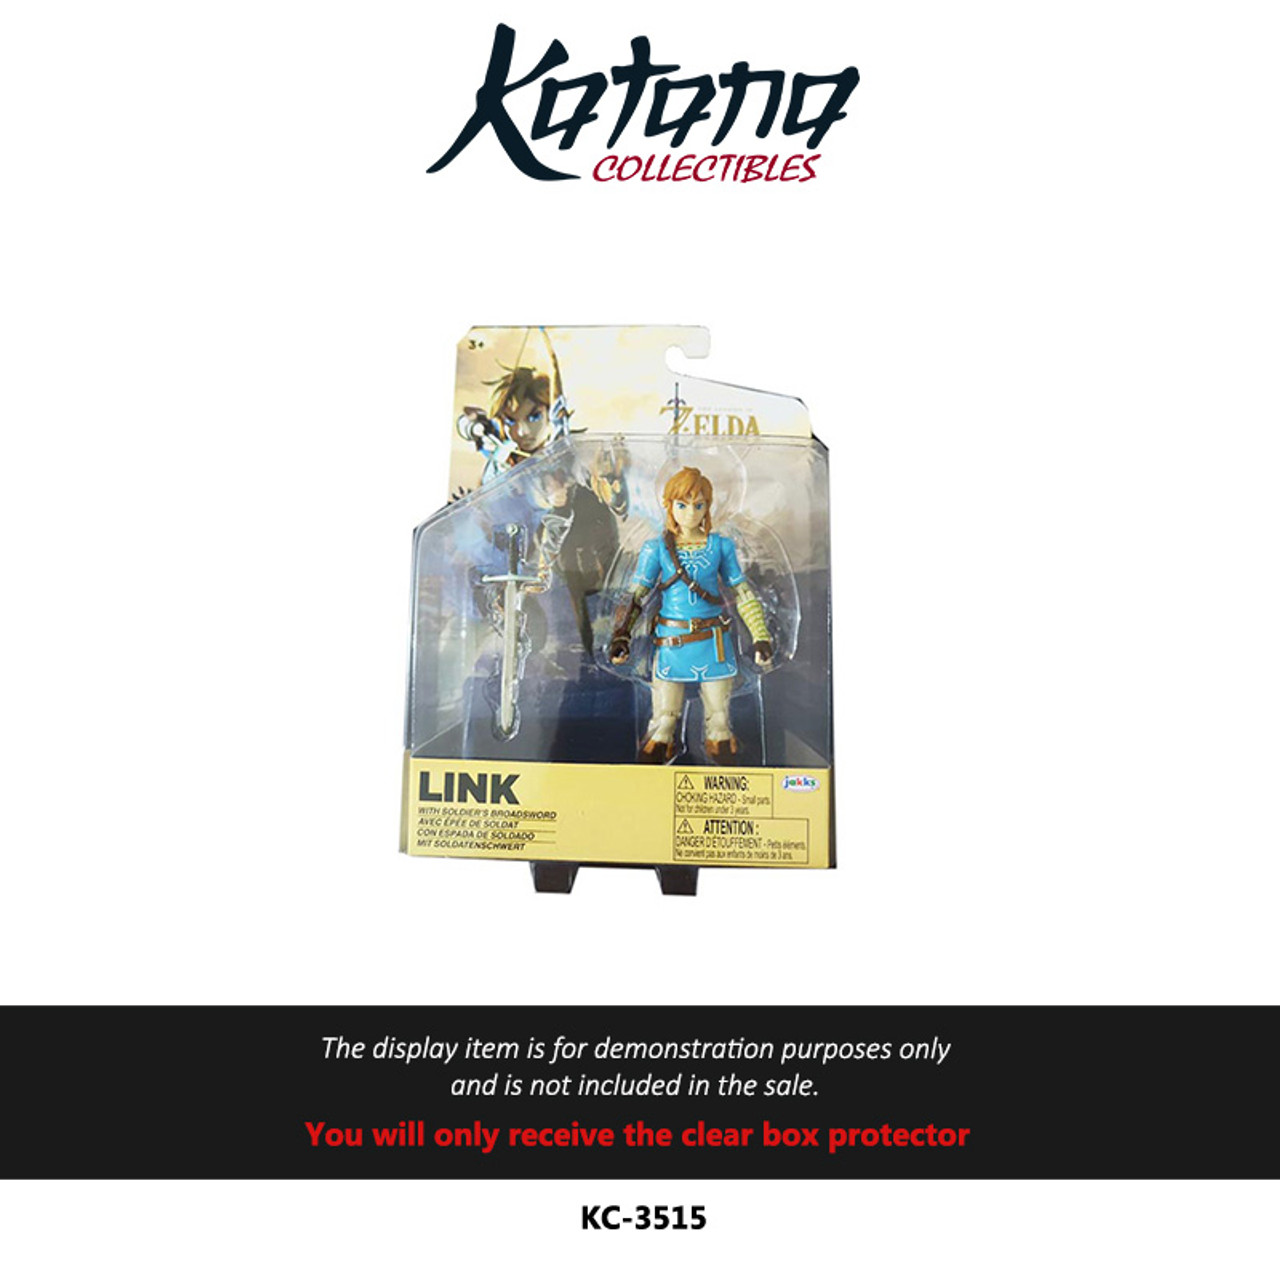 Katana Collectibles Protector For Jakks Link Action Figure (Legend of Zelda) Breath of the Wild